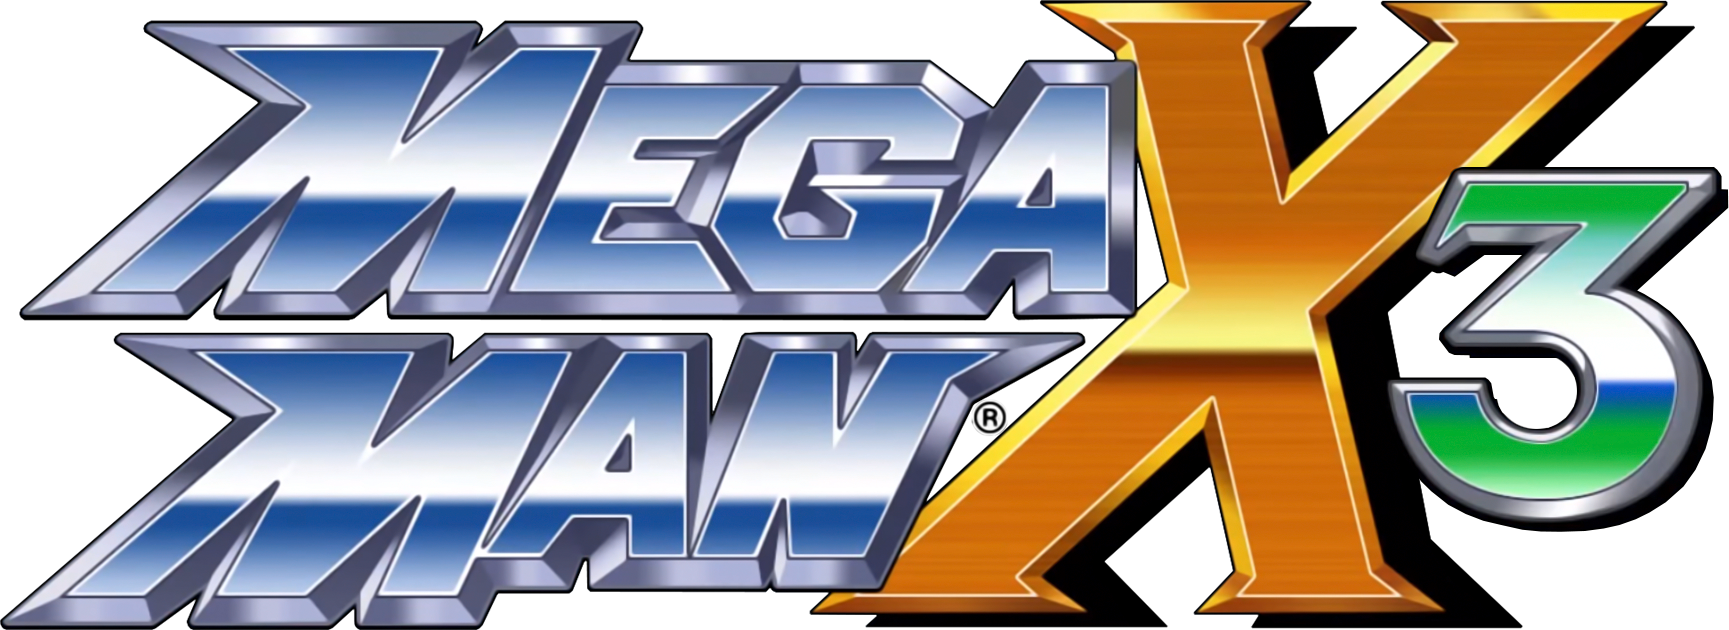 Mega Man X3 Details - LaunchBox Games Database